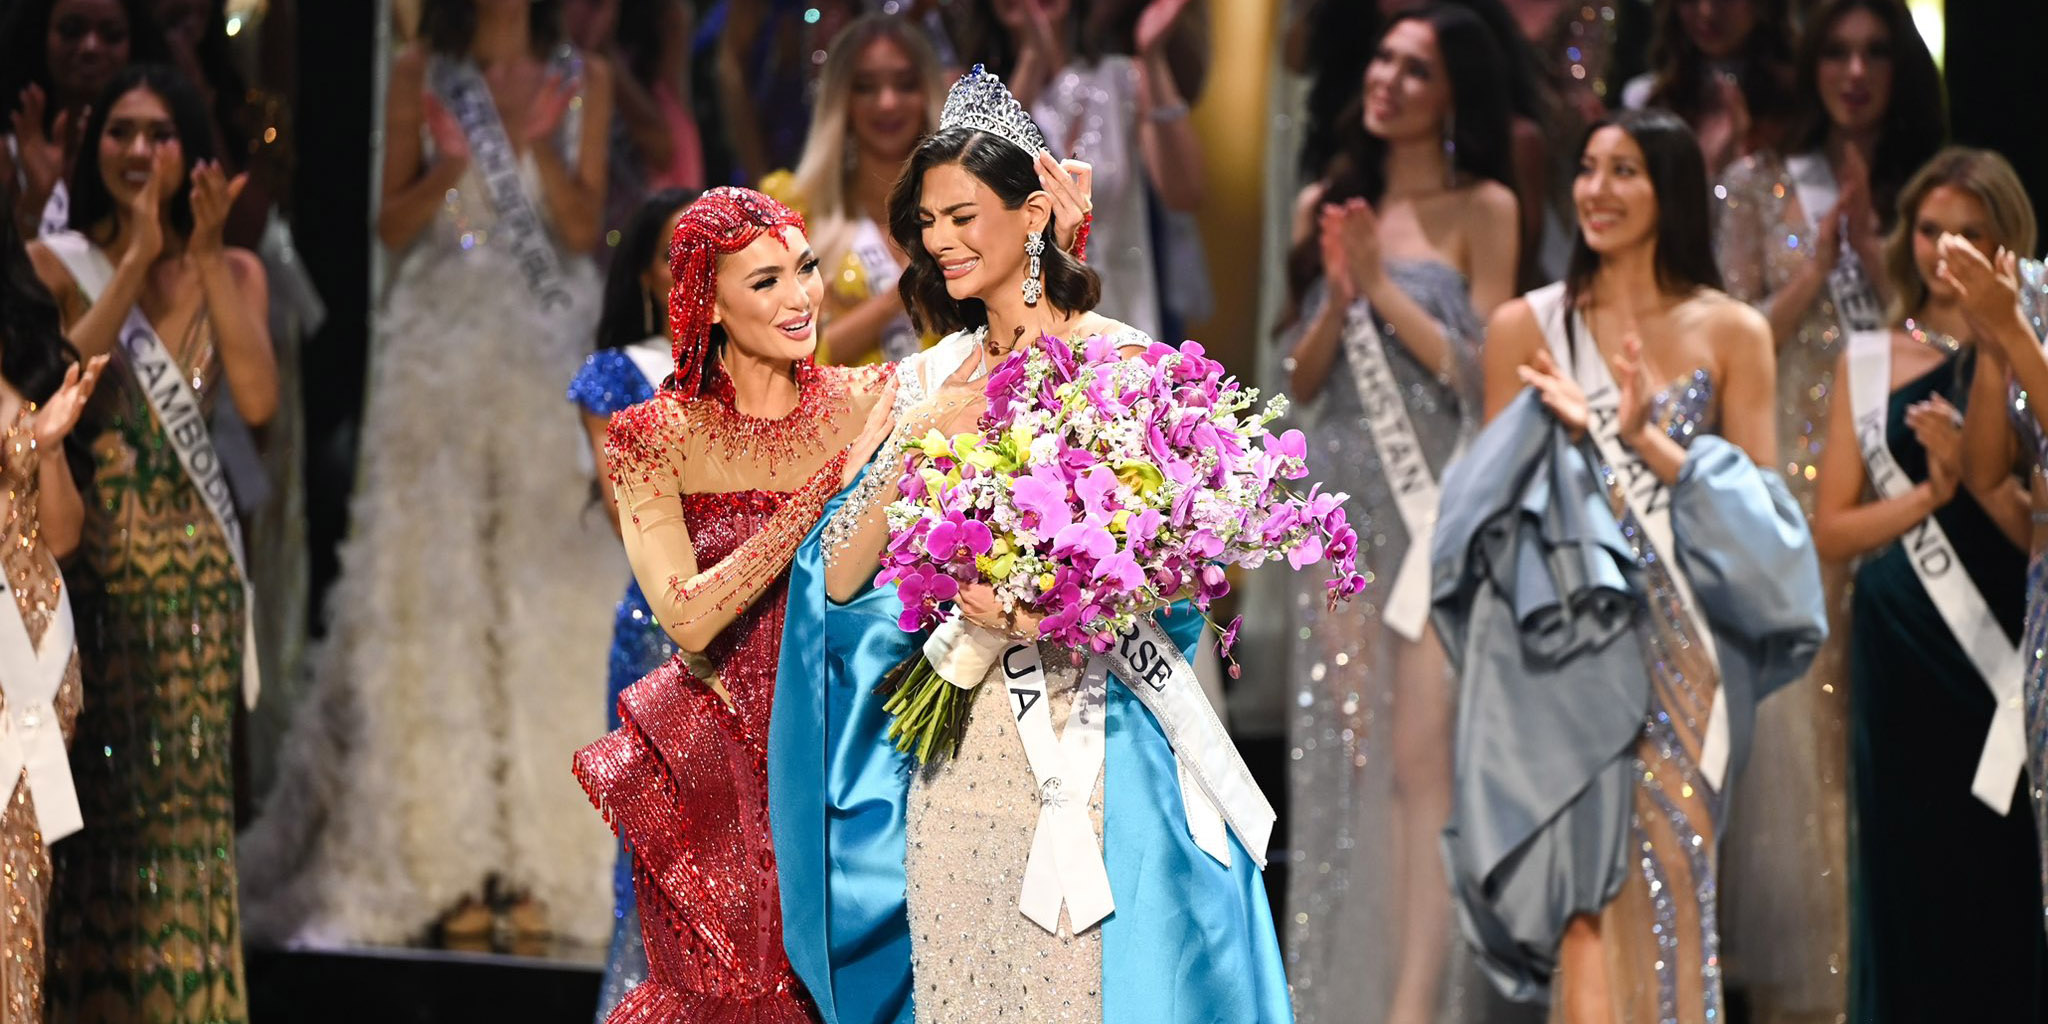 Sheynnis Palacios of Nicaragua crowned Miss Universe